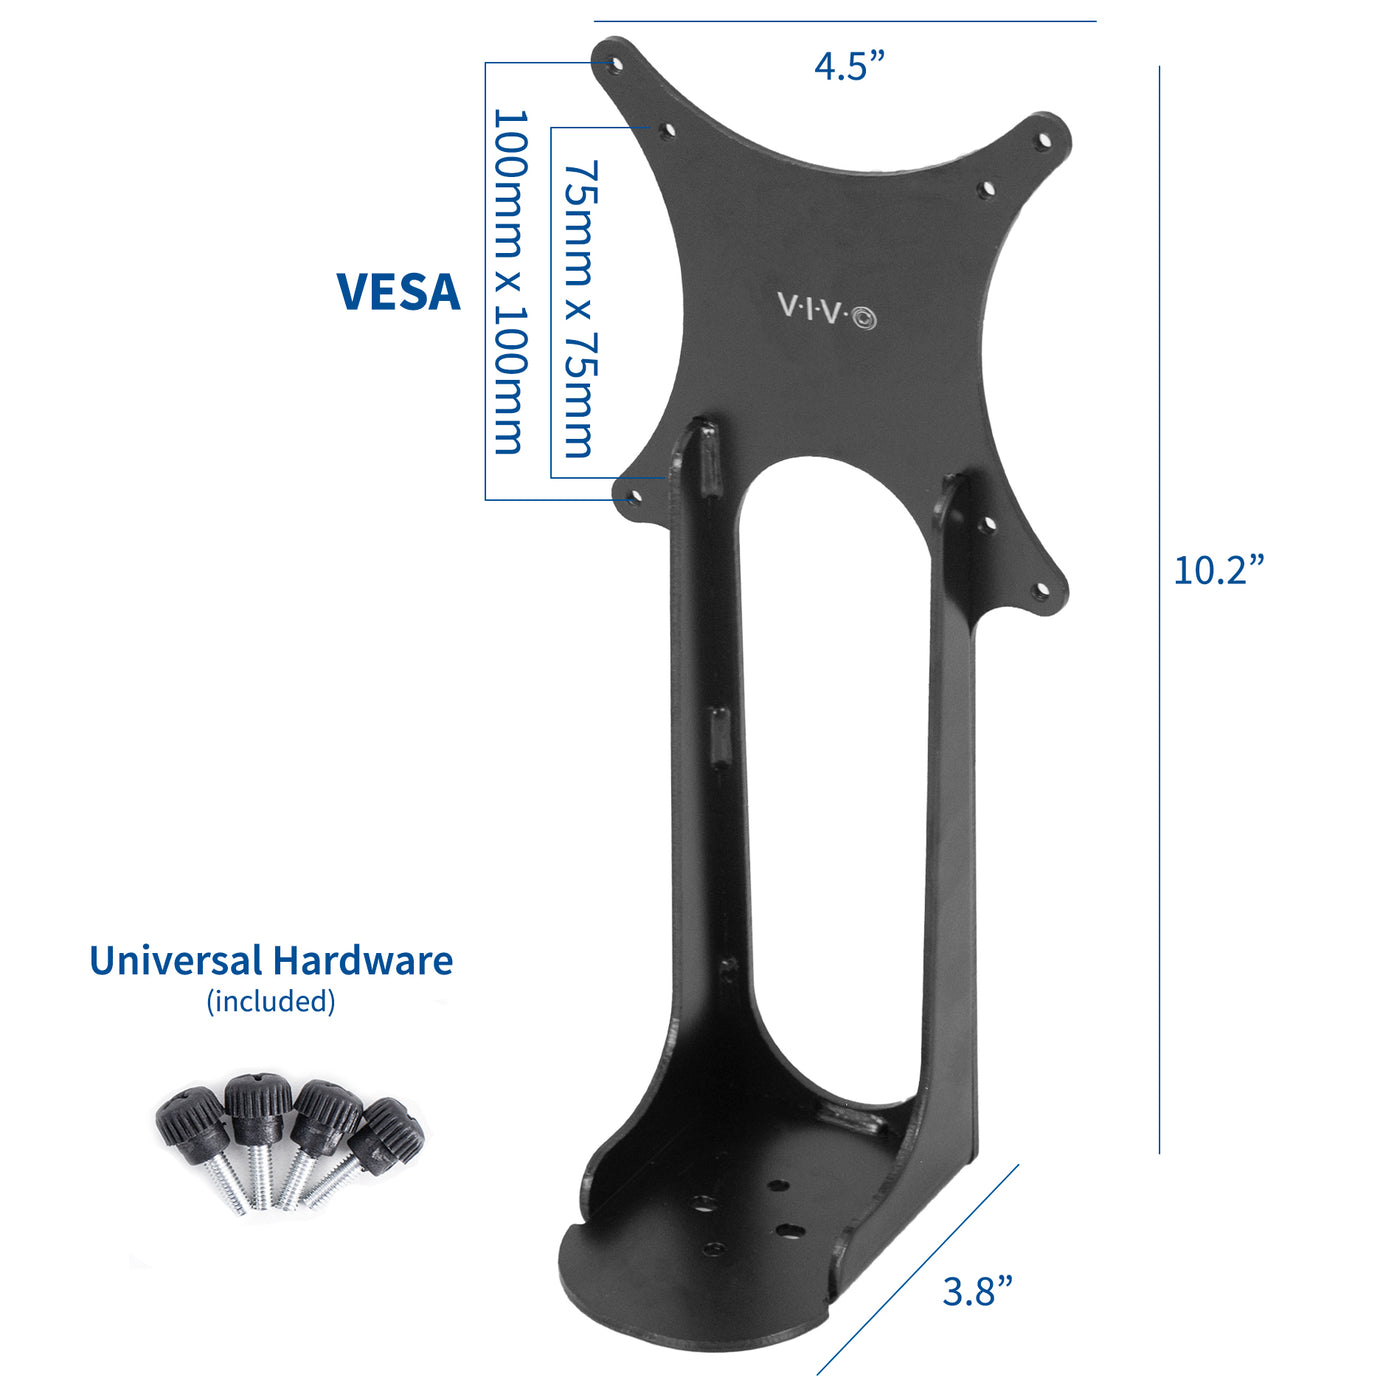 Sturdy Samsung monitor mount VESA adapter bracket with universal hardware.